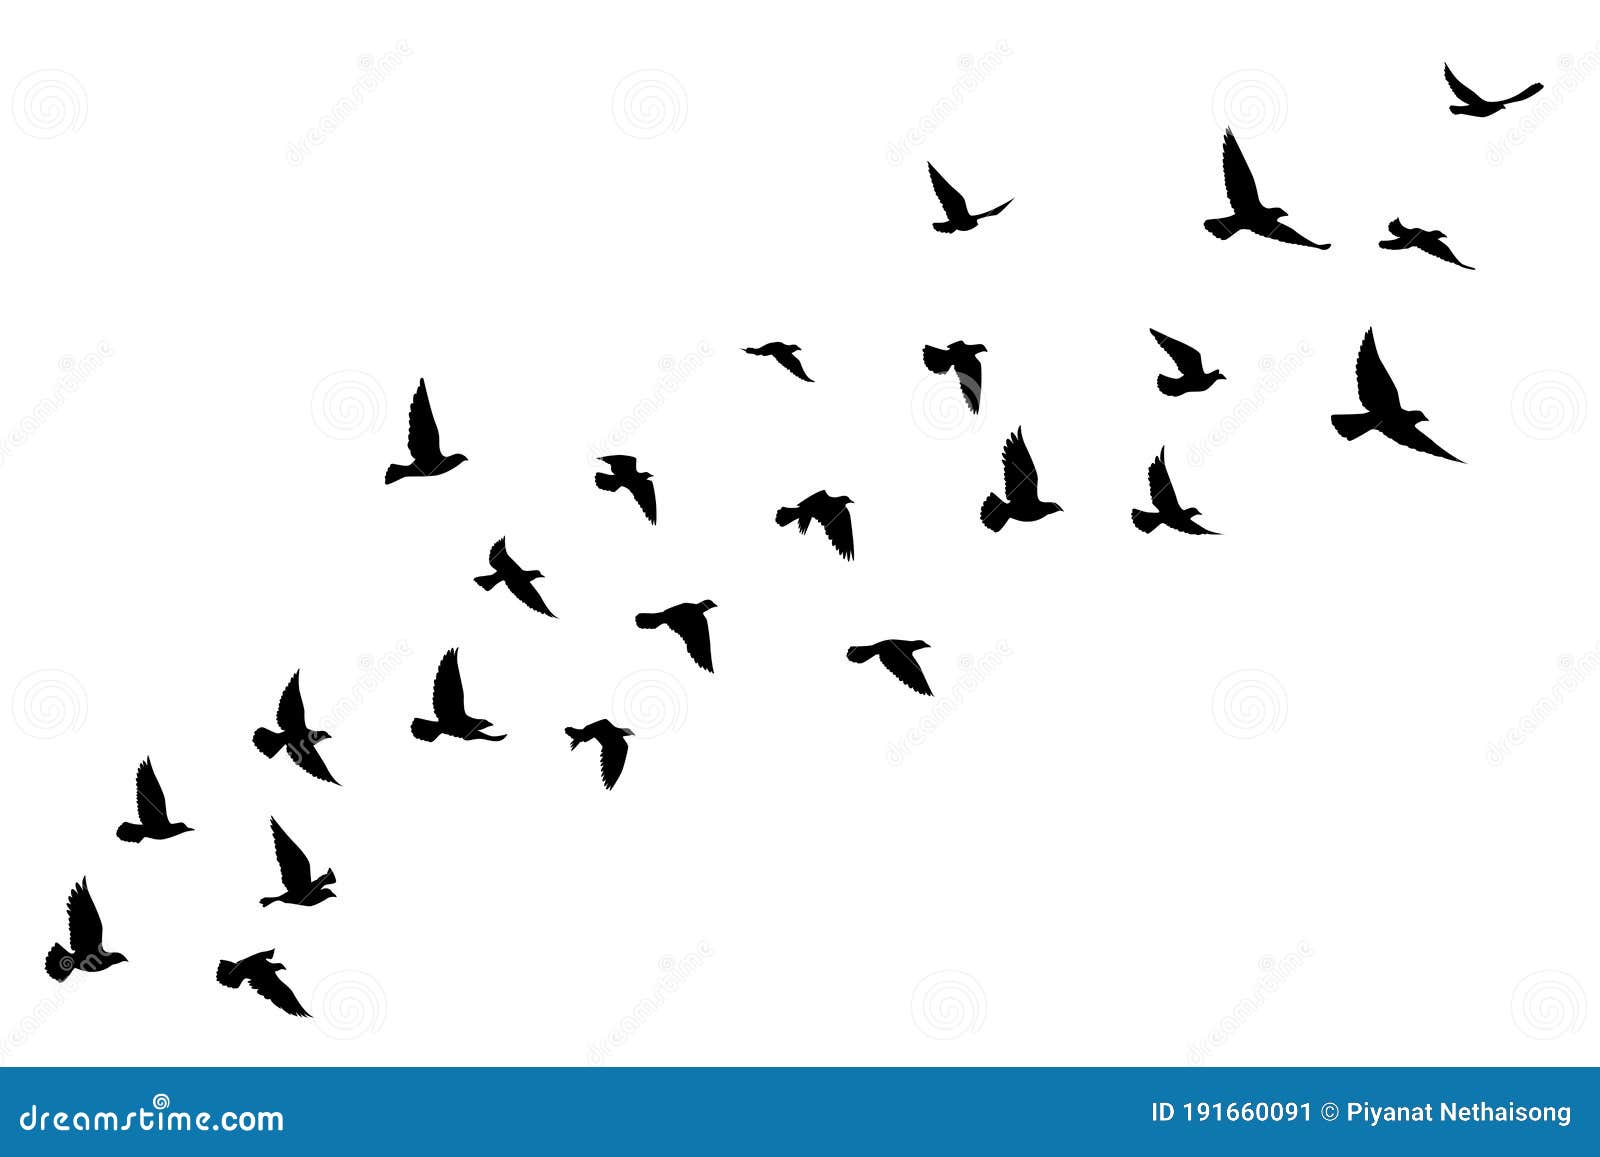 flying birds silhouettes on white background.  .  bird flying. tattoo 